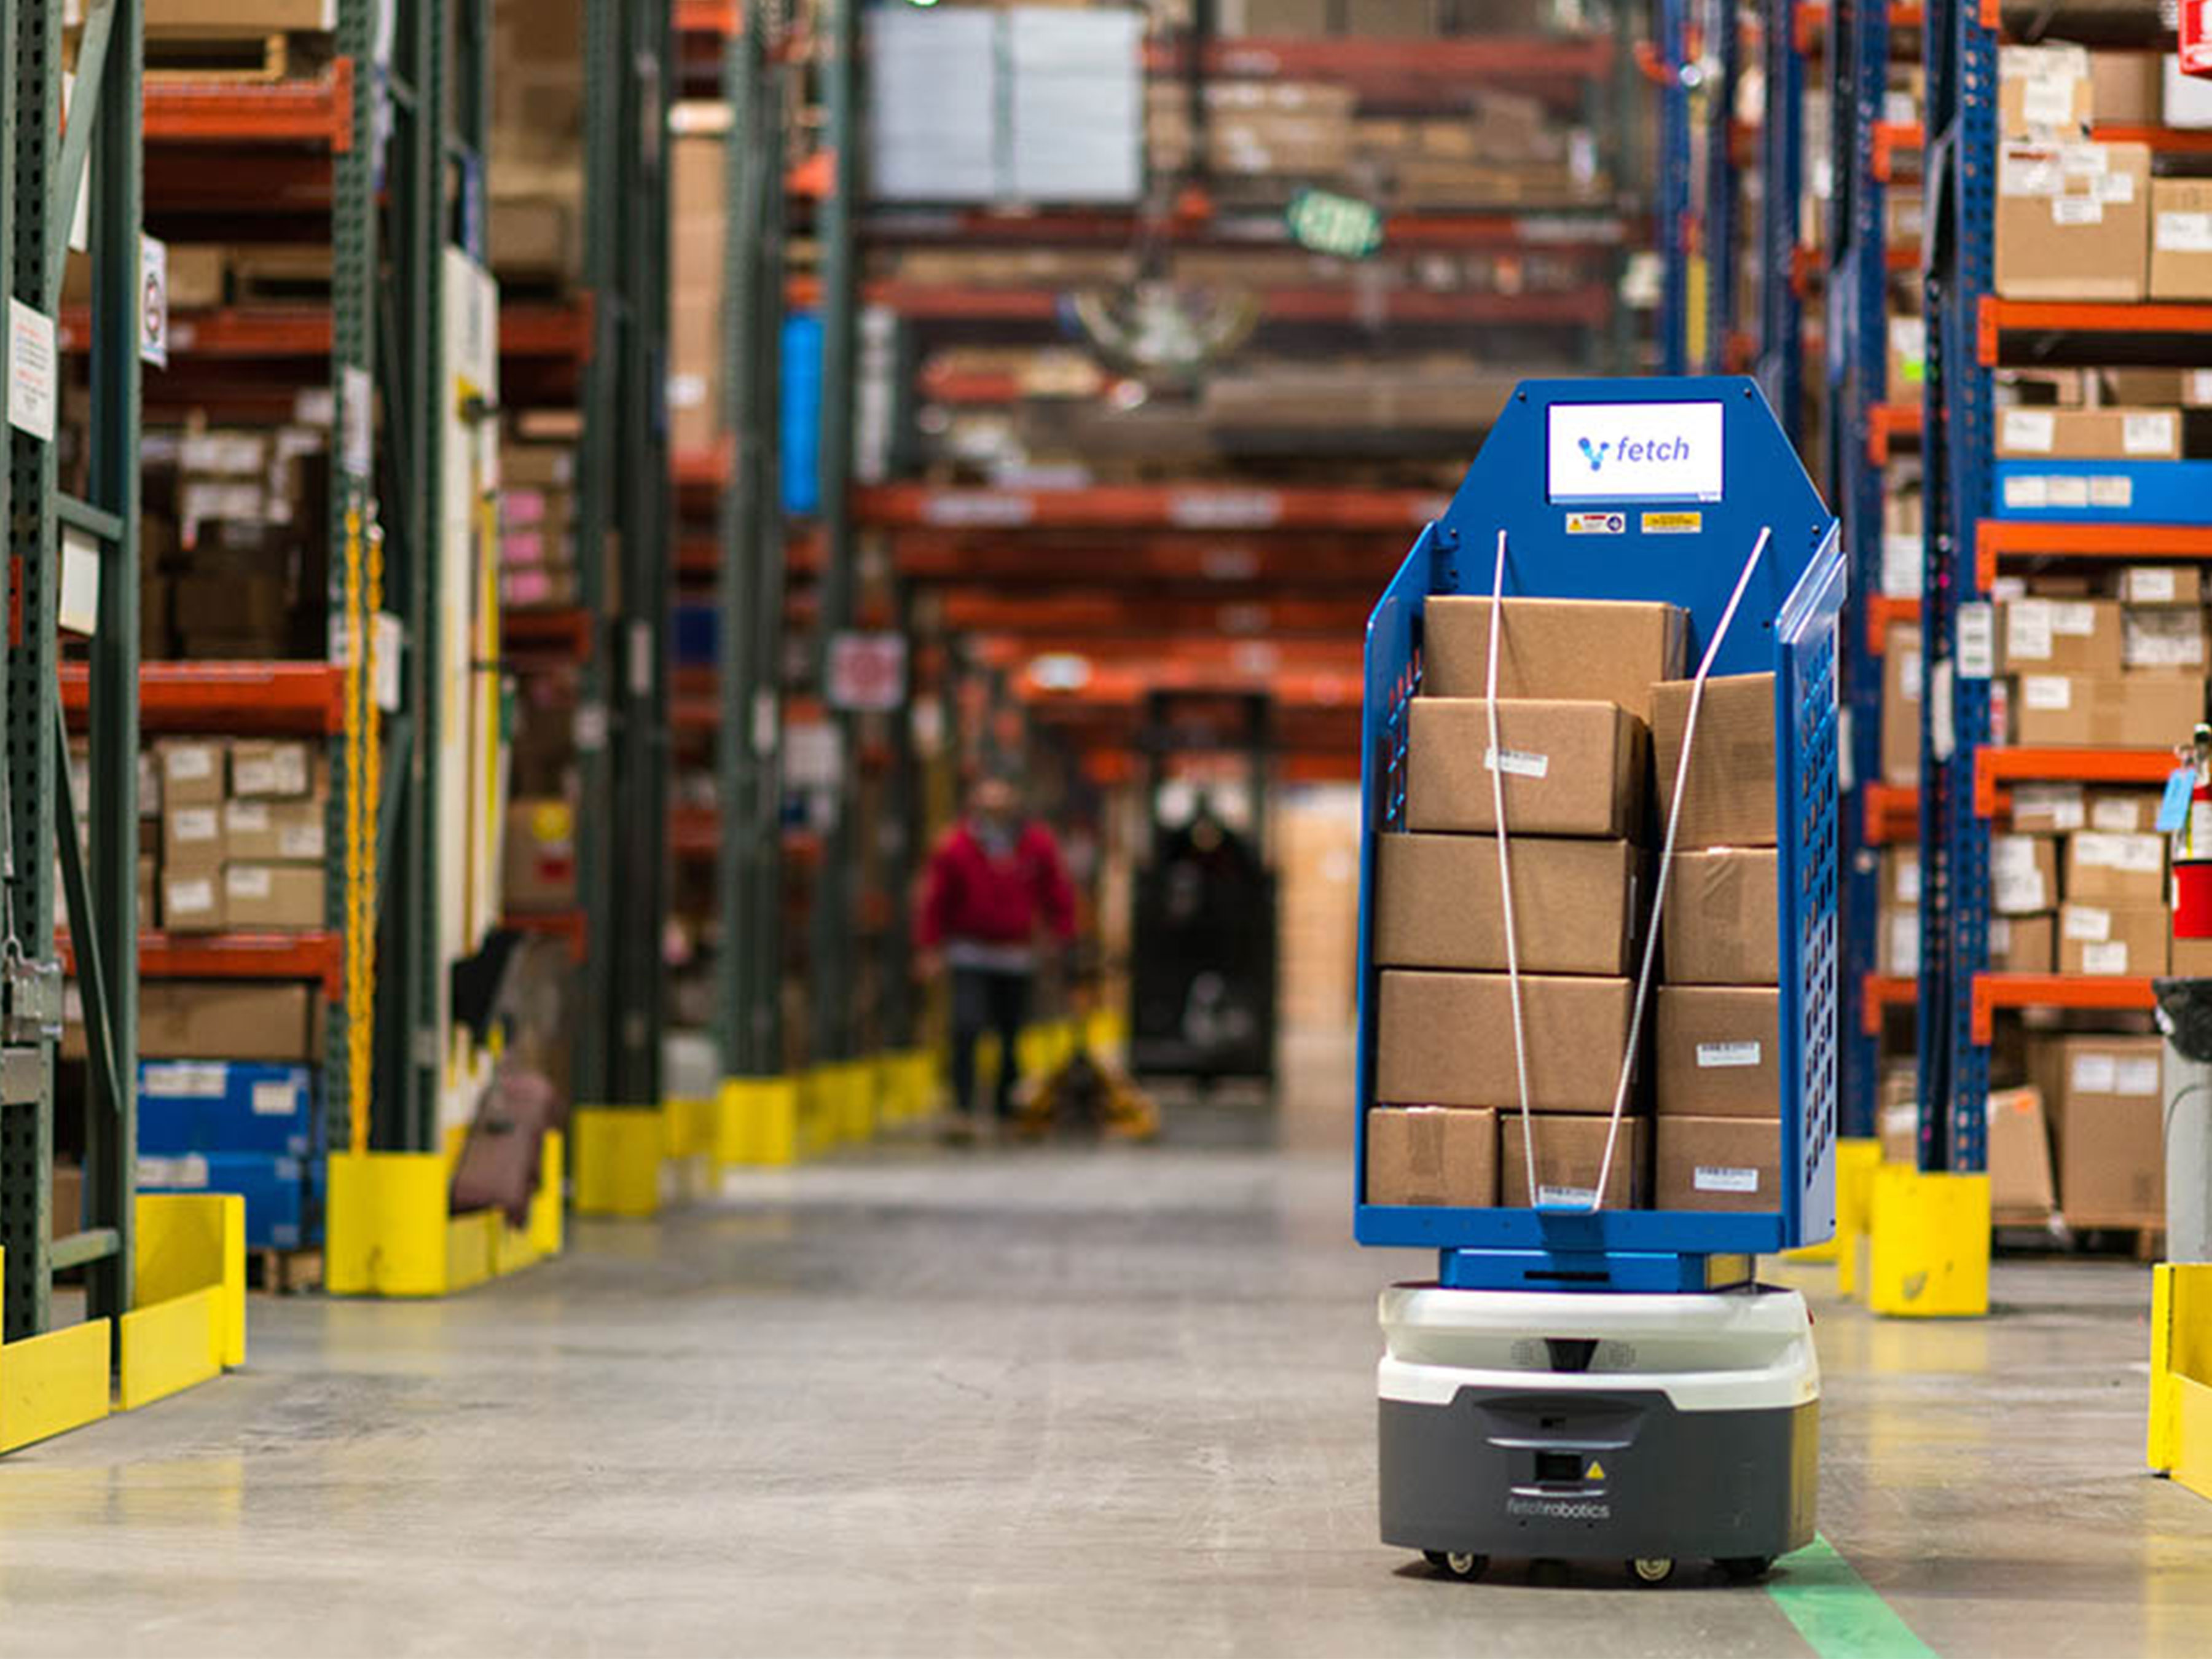 Fetch robotics robot in a warehouse